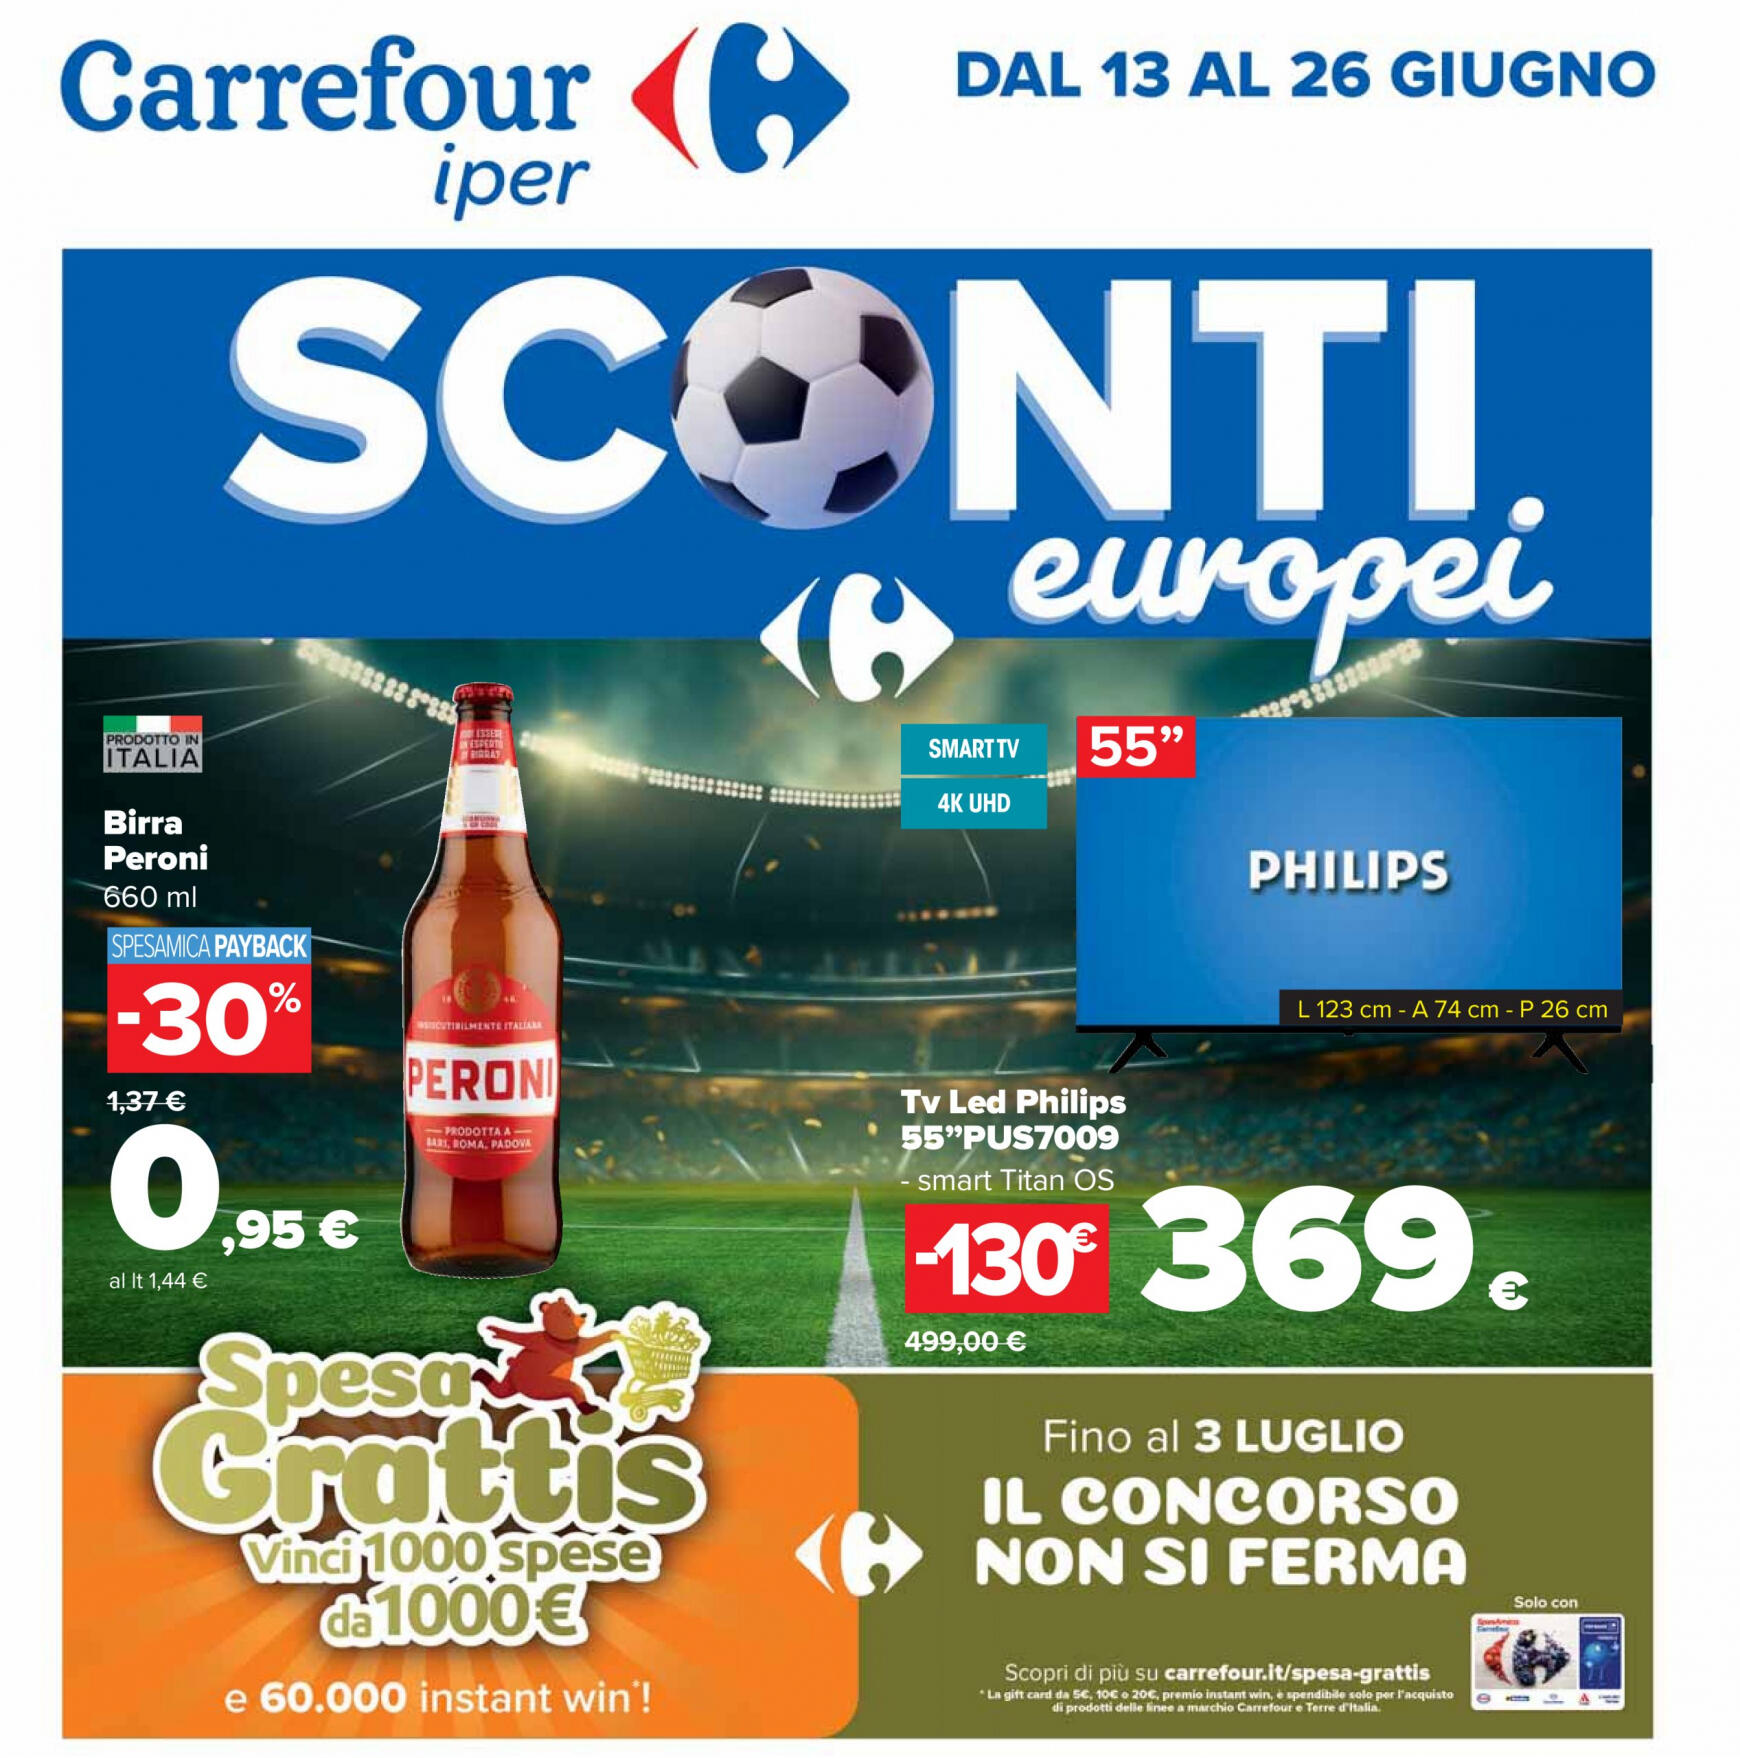 carrefour - Nuovo volantino Carrefour - Sconti europei 13.06. - 26.06. - page: 1